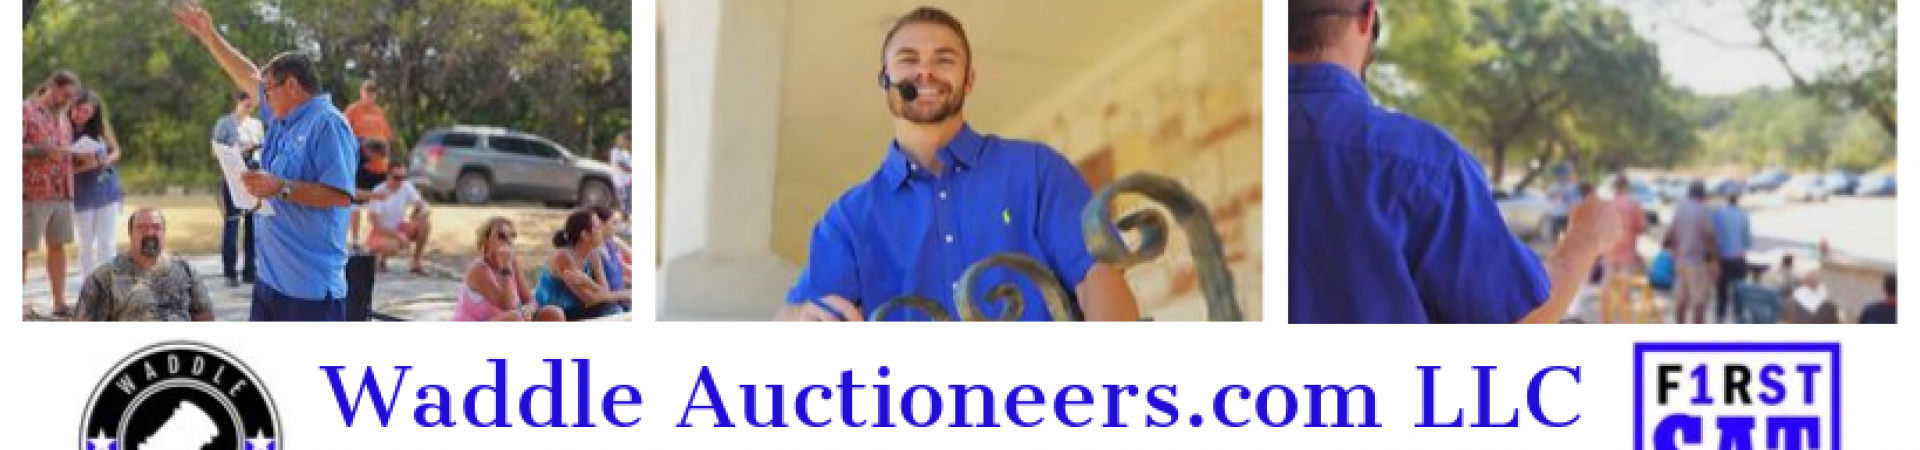 Waddle auctioneers.com llc - fb banner